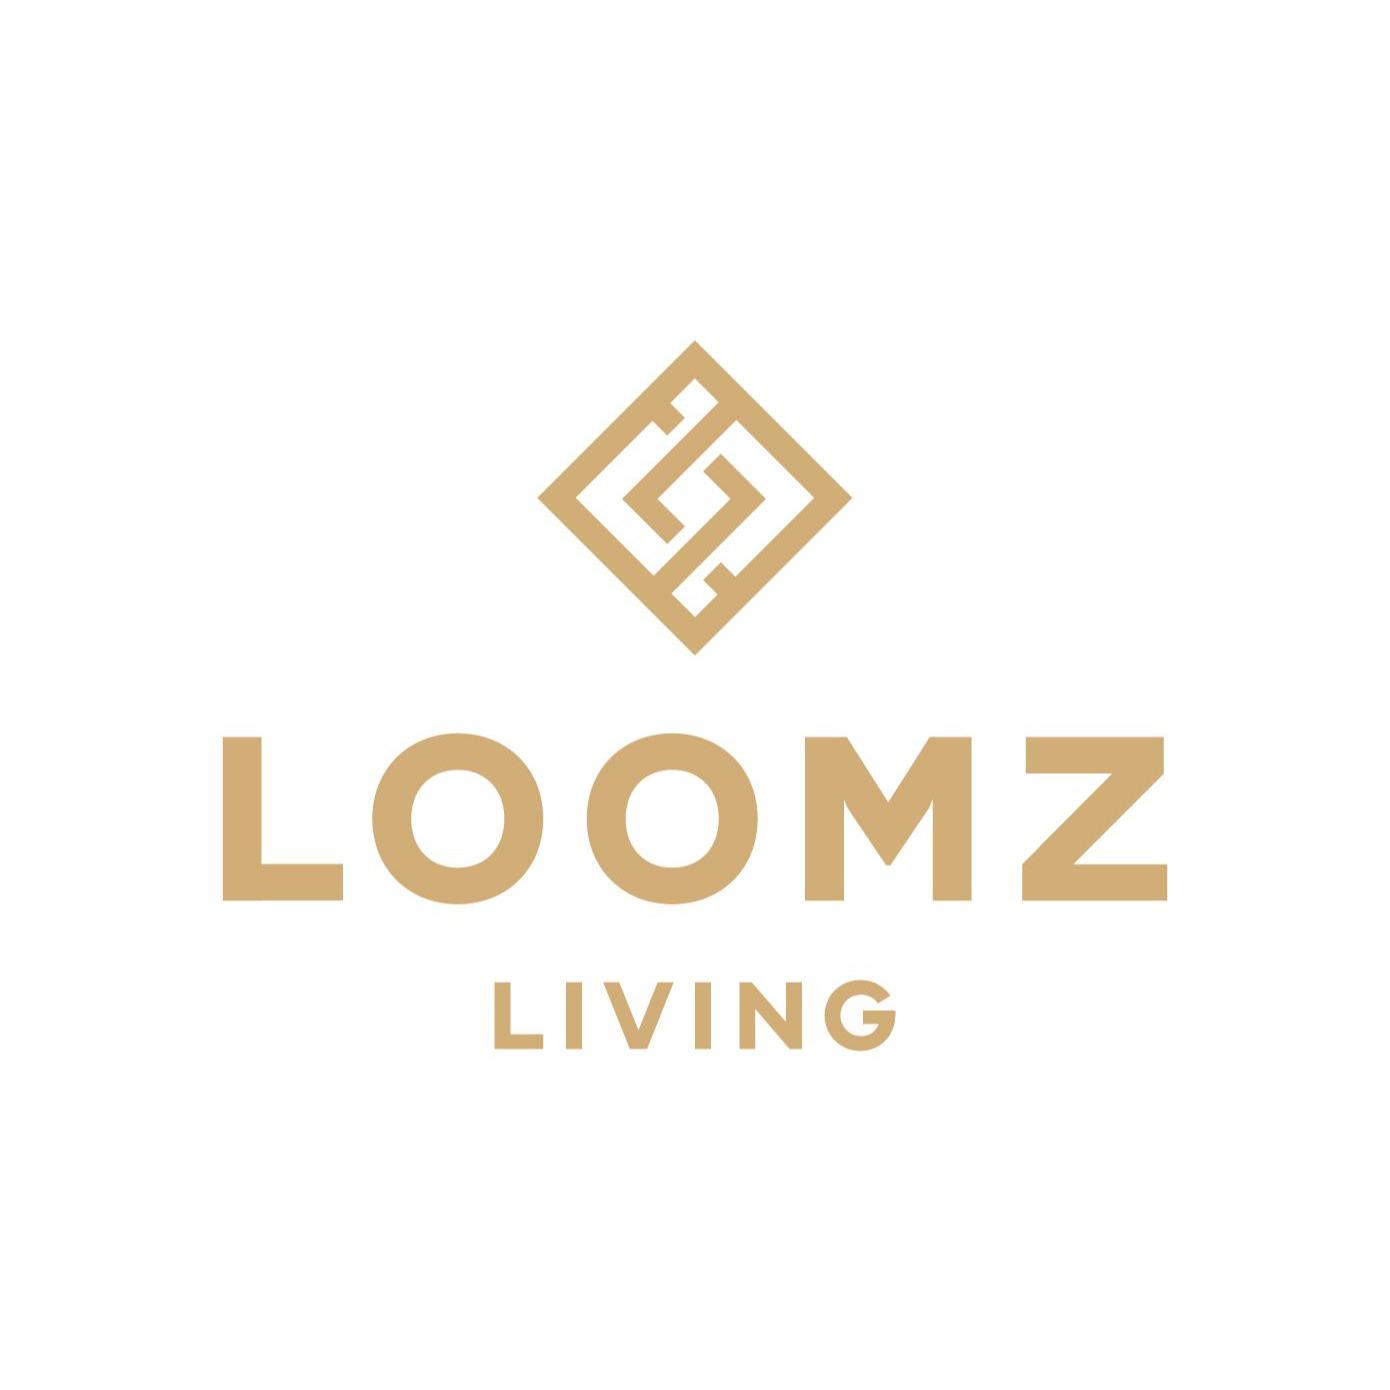 Loomz living - Aparthotel Innsbruck Logo